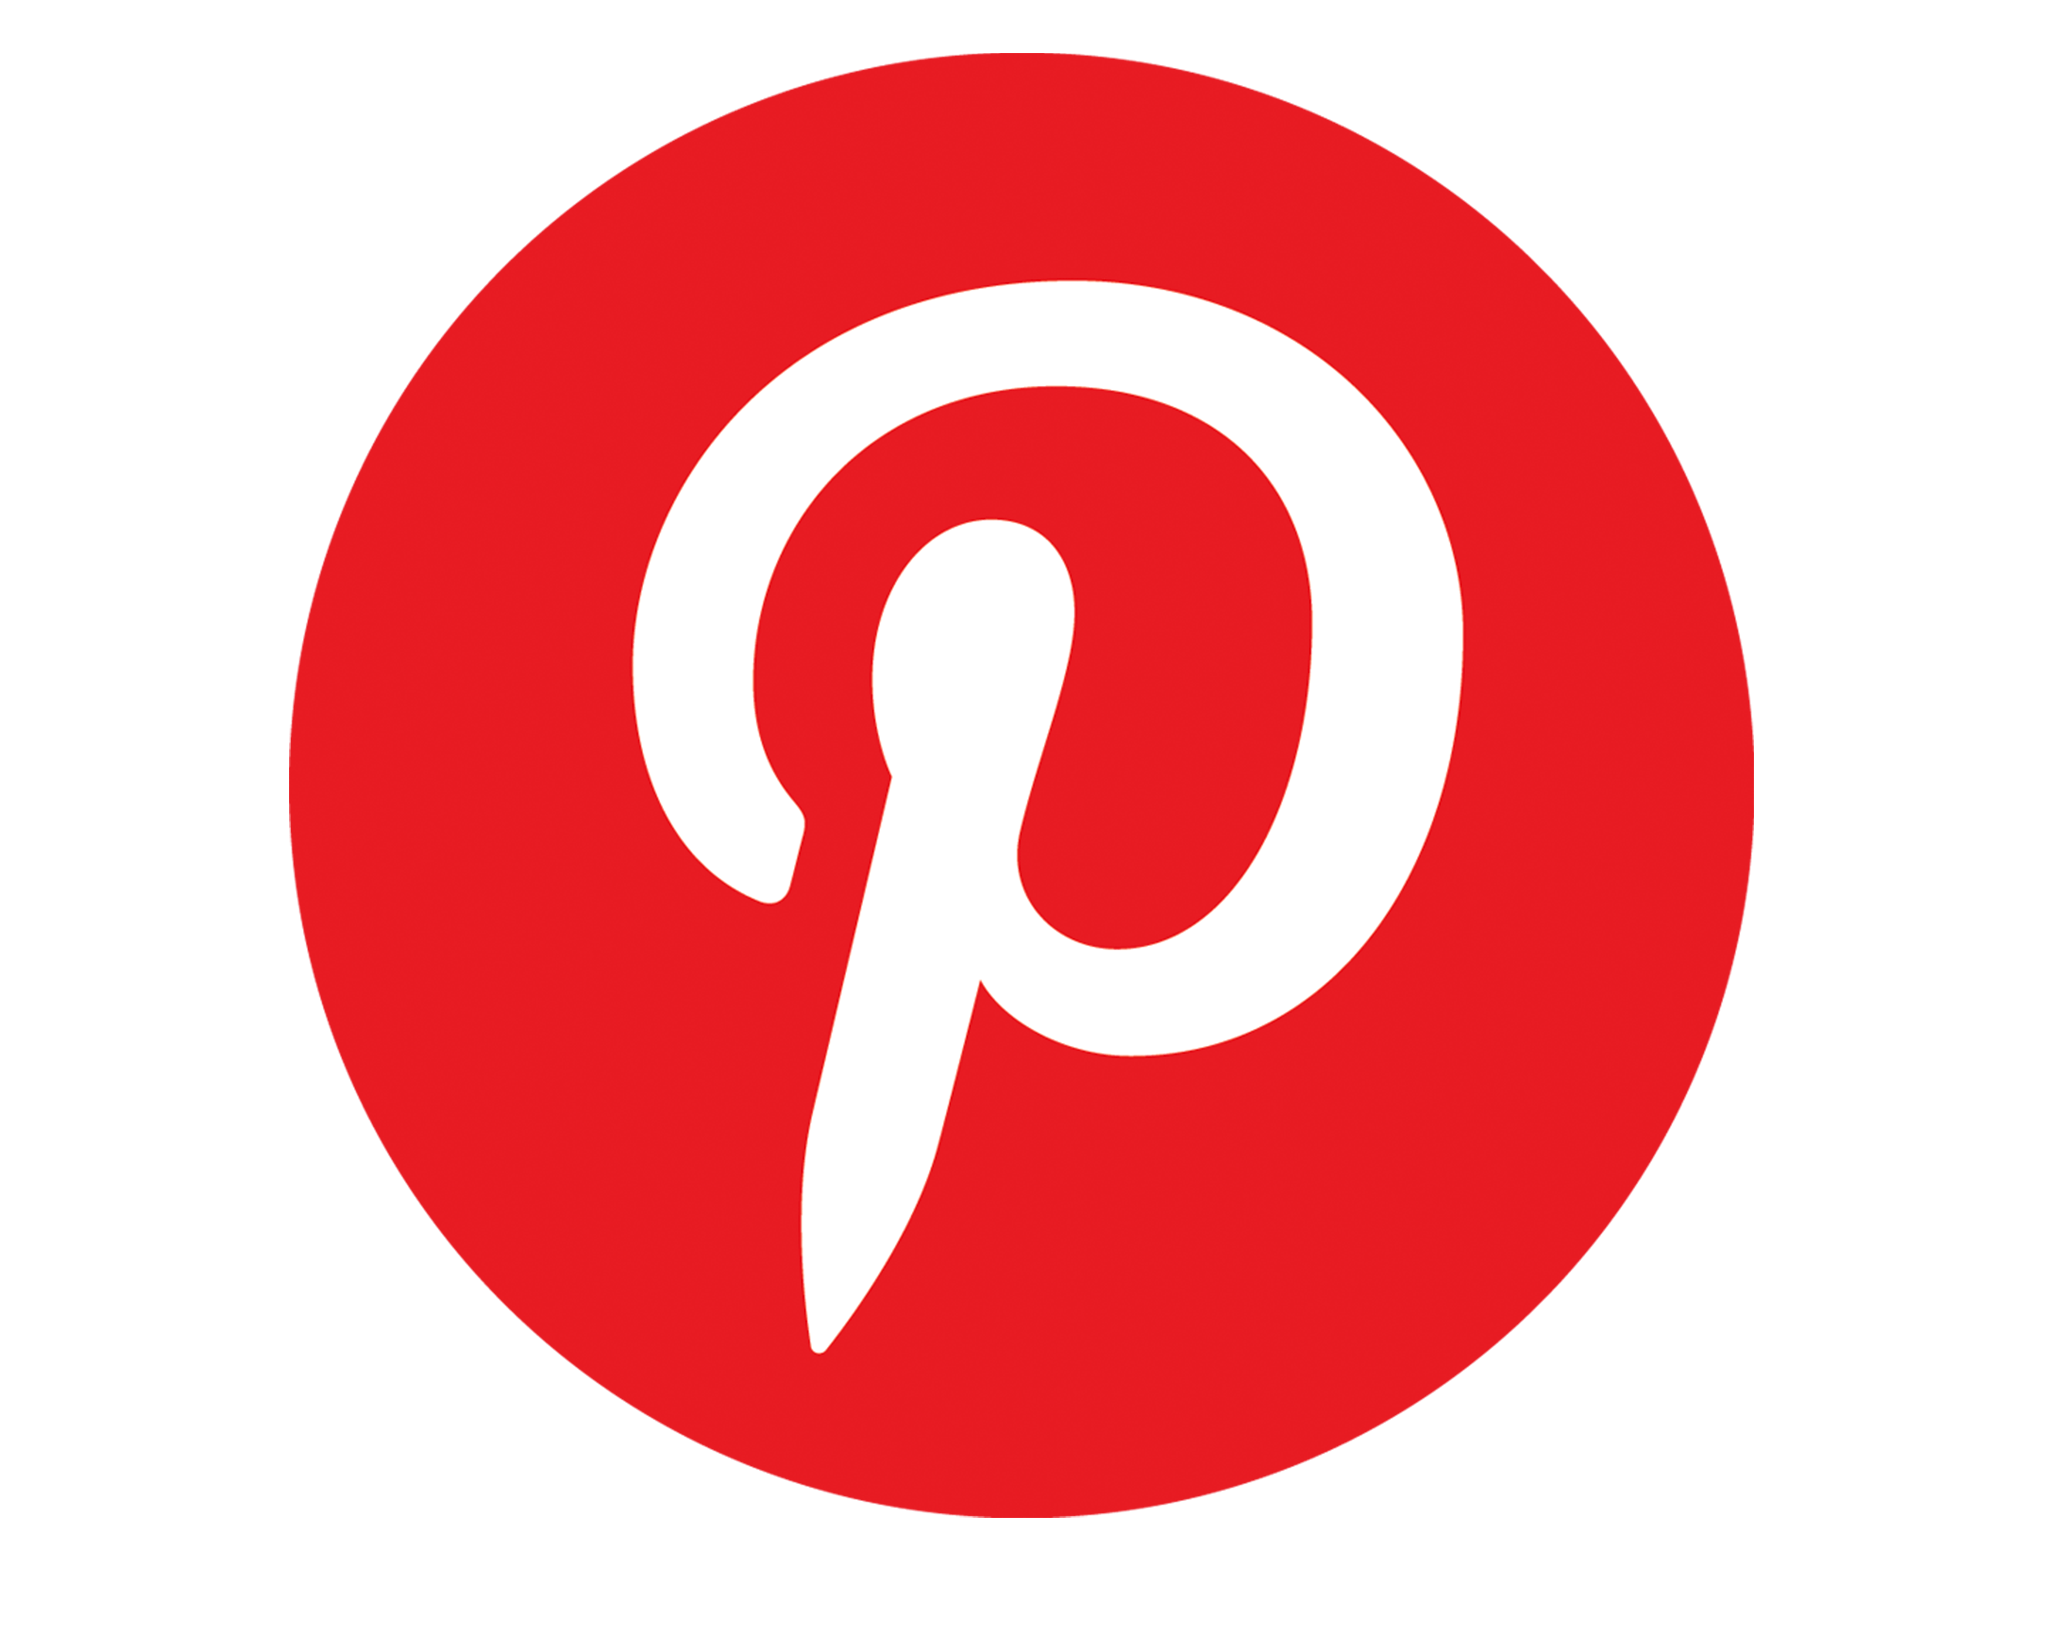 Optimize your Pinterest account